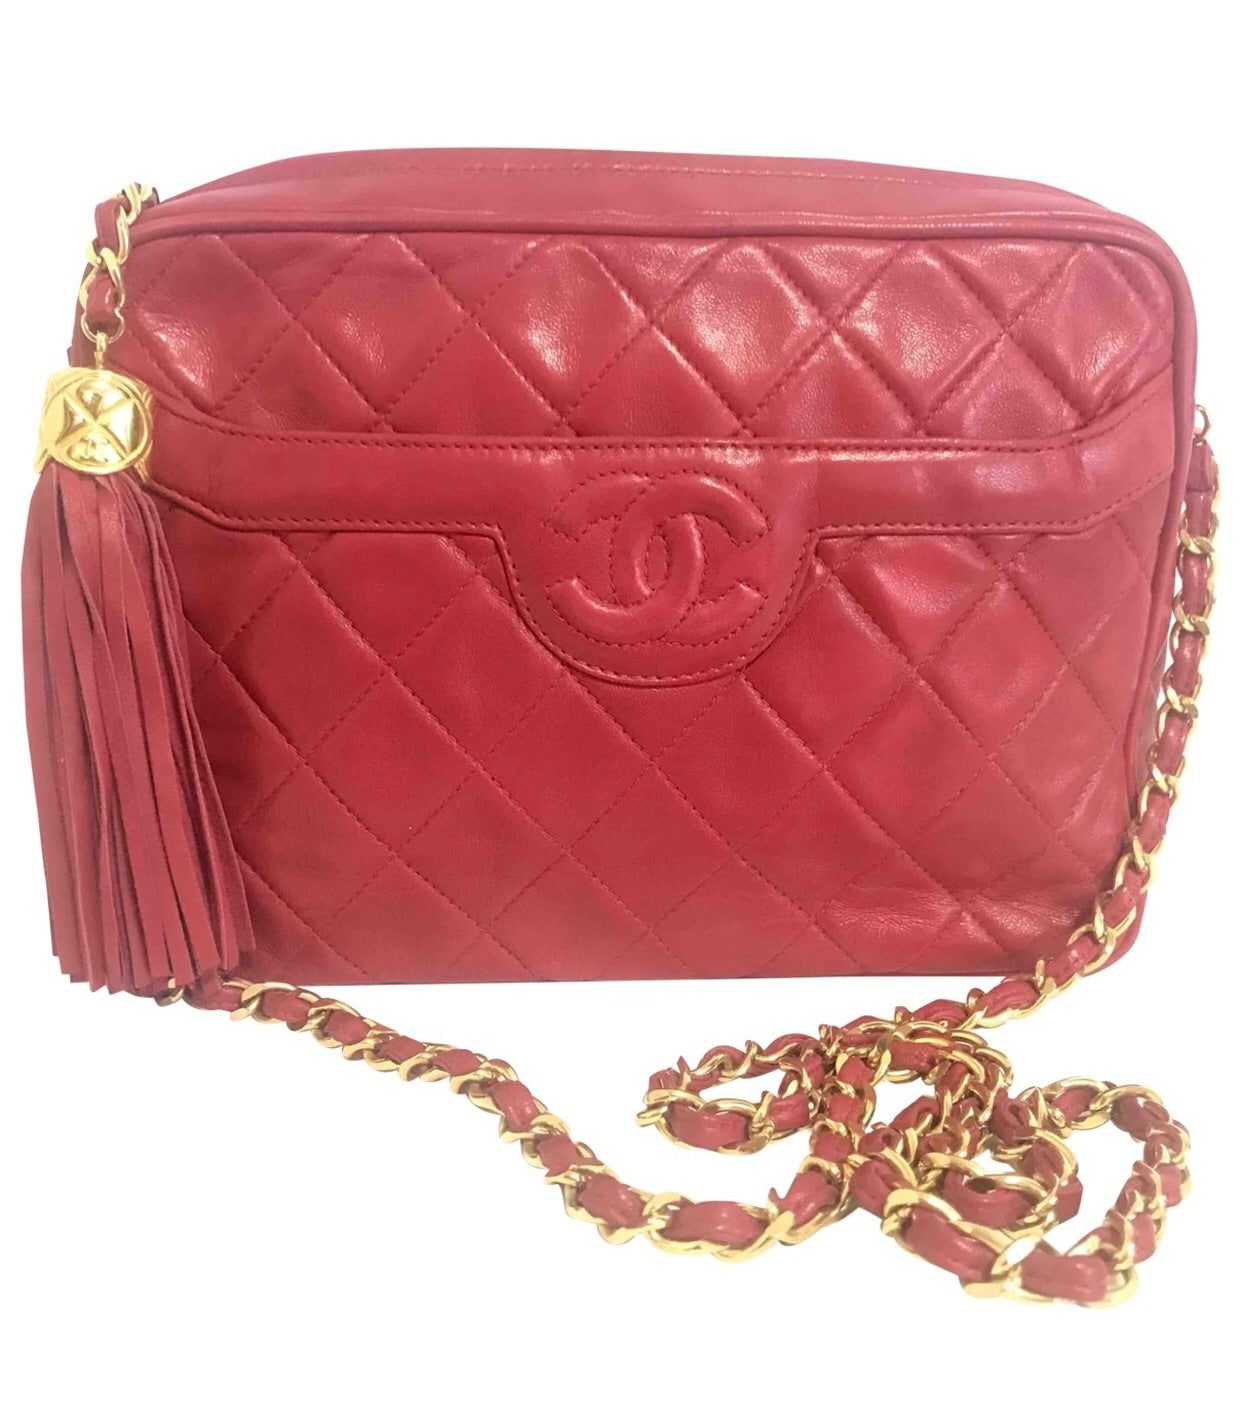 Vintage Chanel red lambskin camera bag style chain shoulder bag